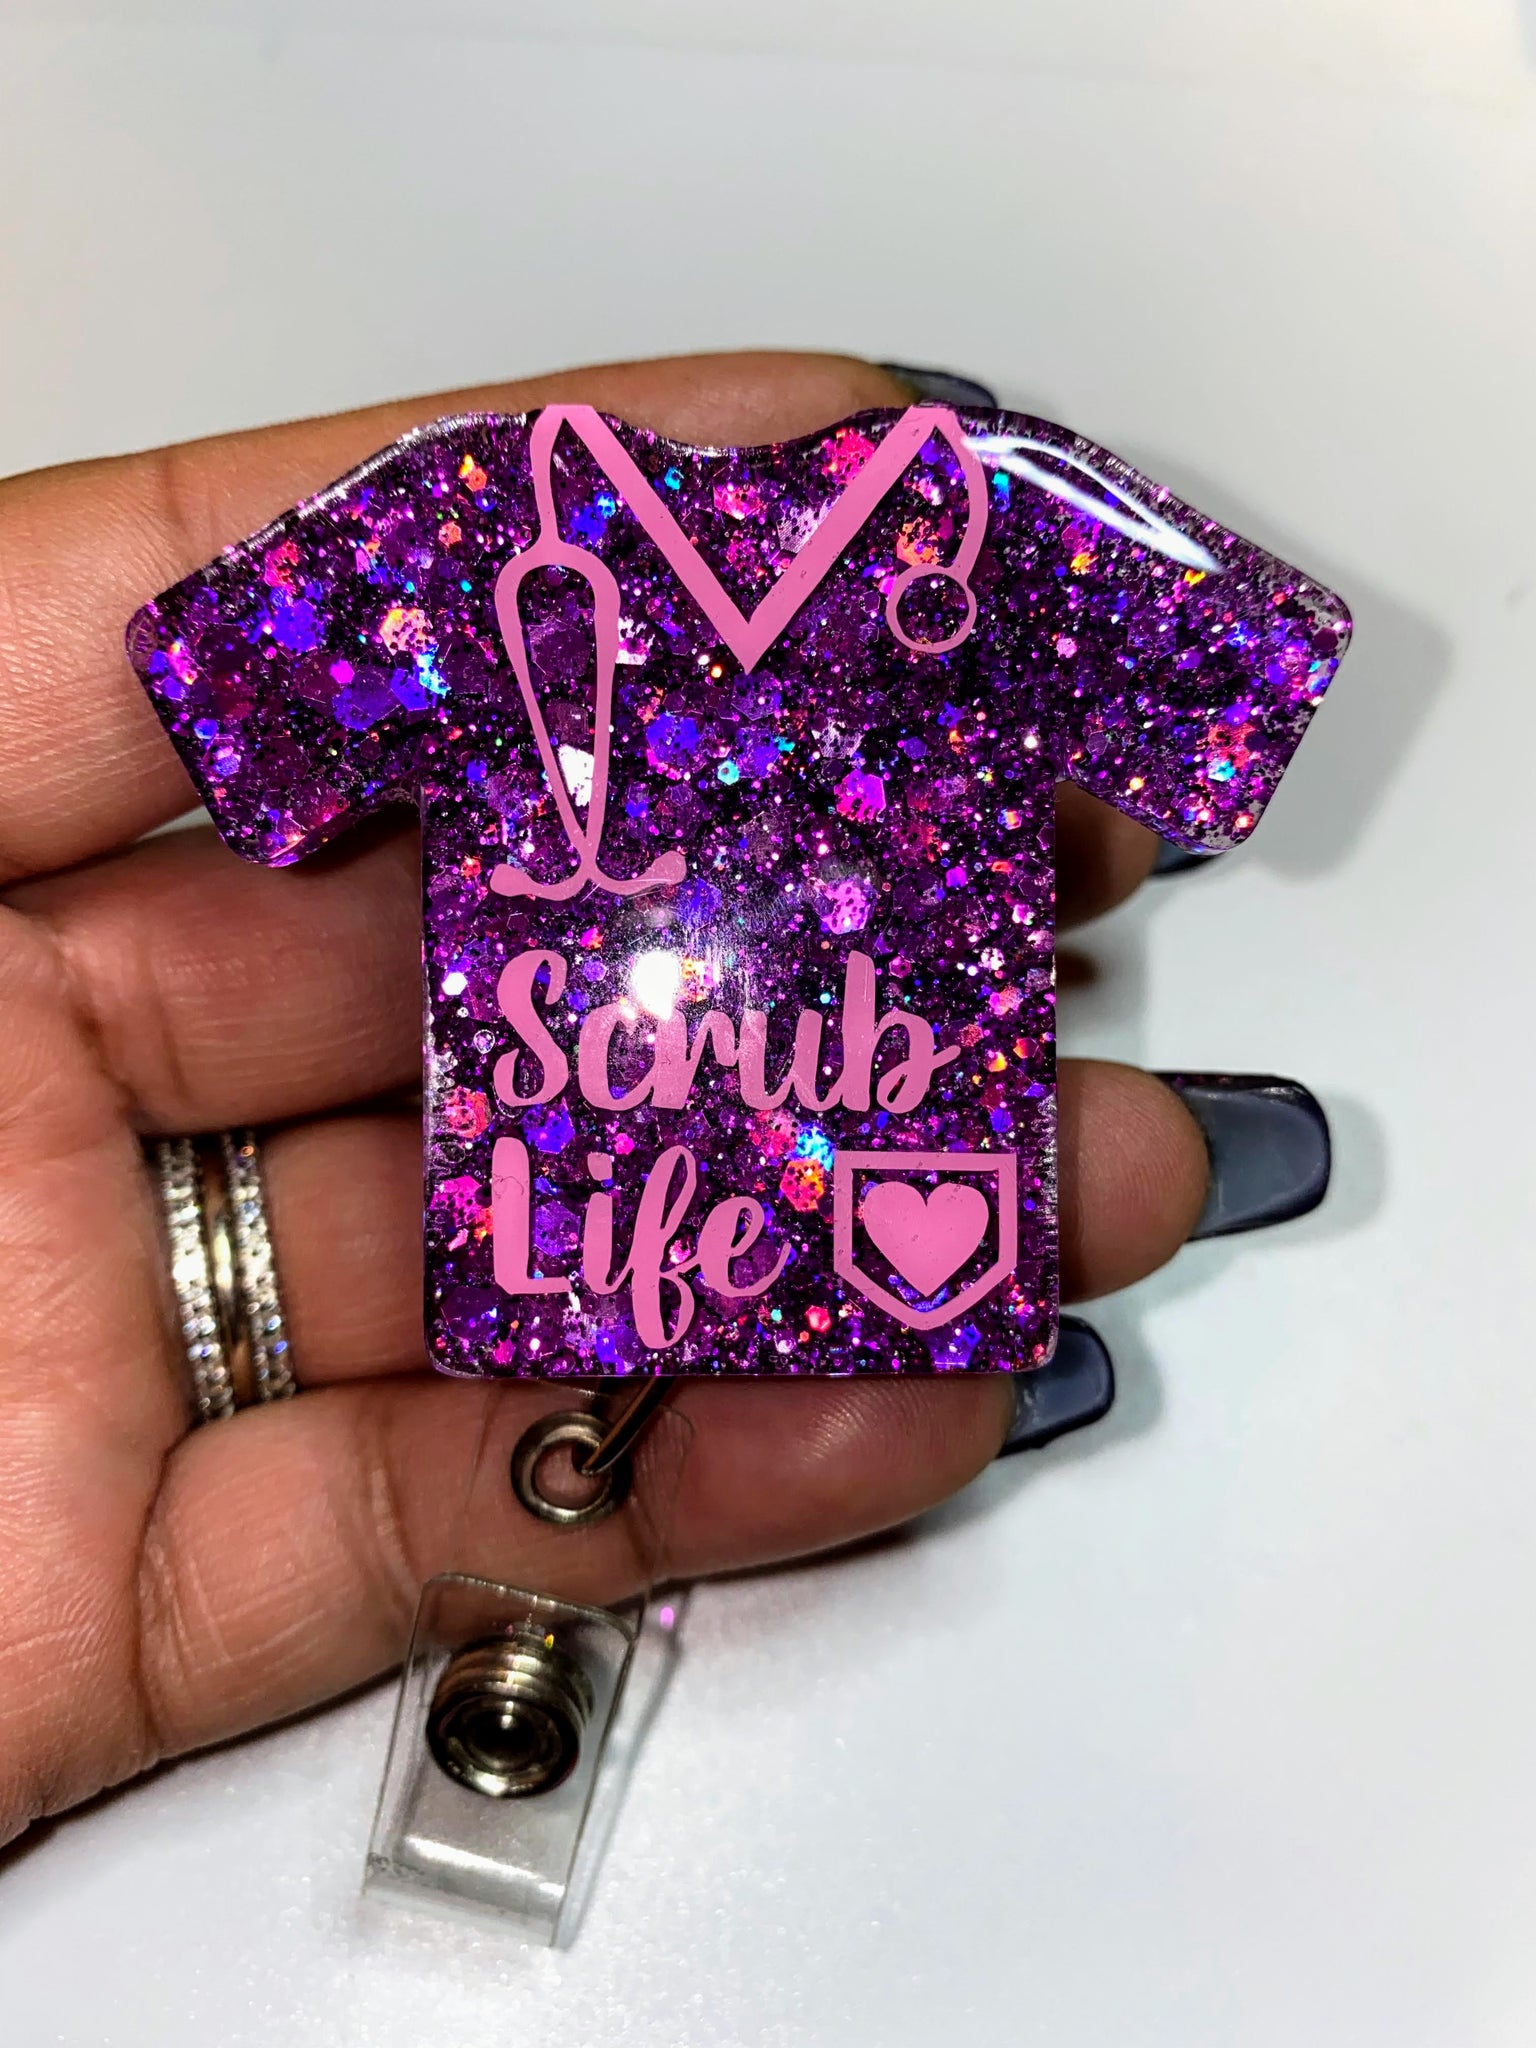 Scrub Life Badge Reel - Enchantments by Lupita